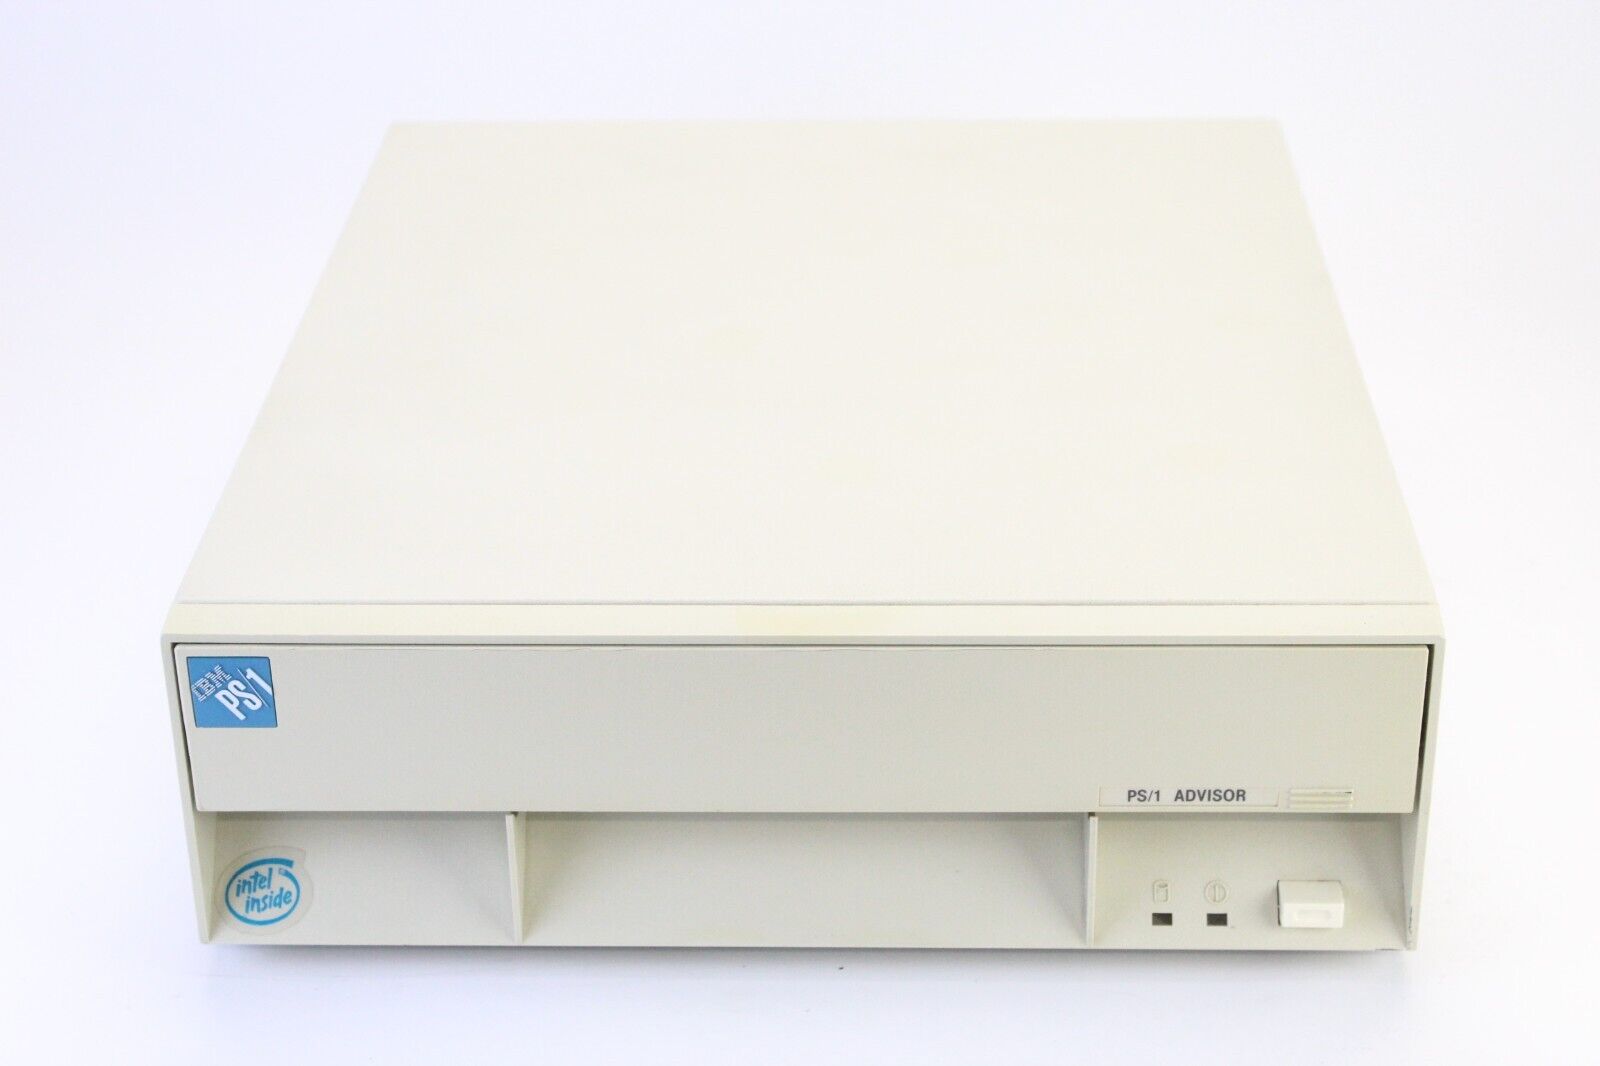 IBM PS/1 Advisor Computer PC 2133 486sx 25MHz 170MB HDD 4MB Ram Windows 3.1